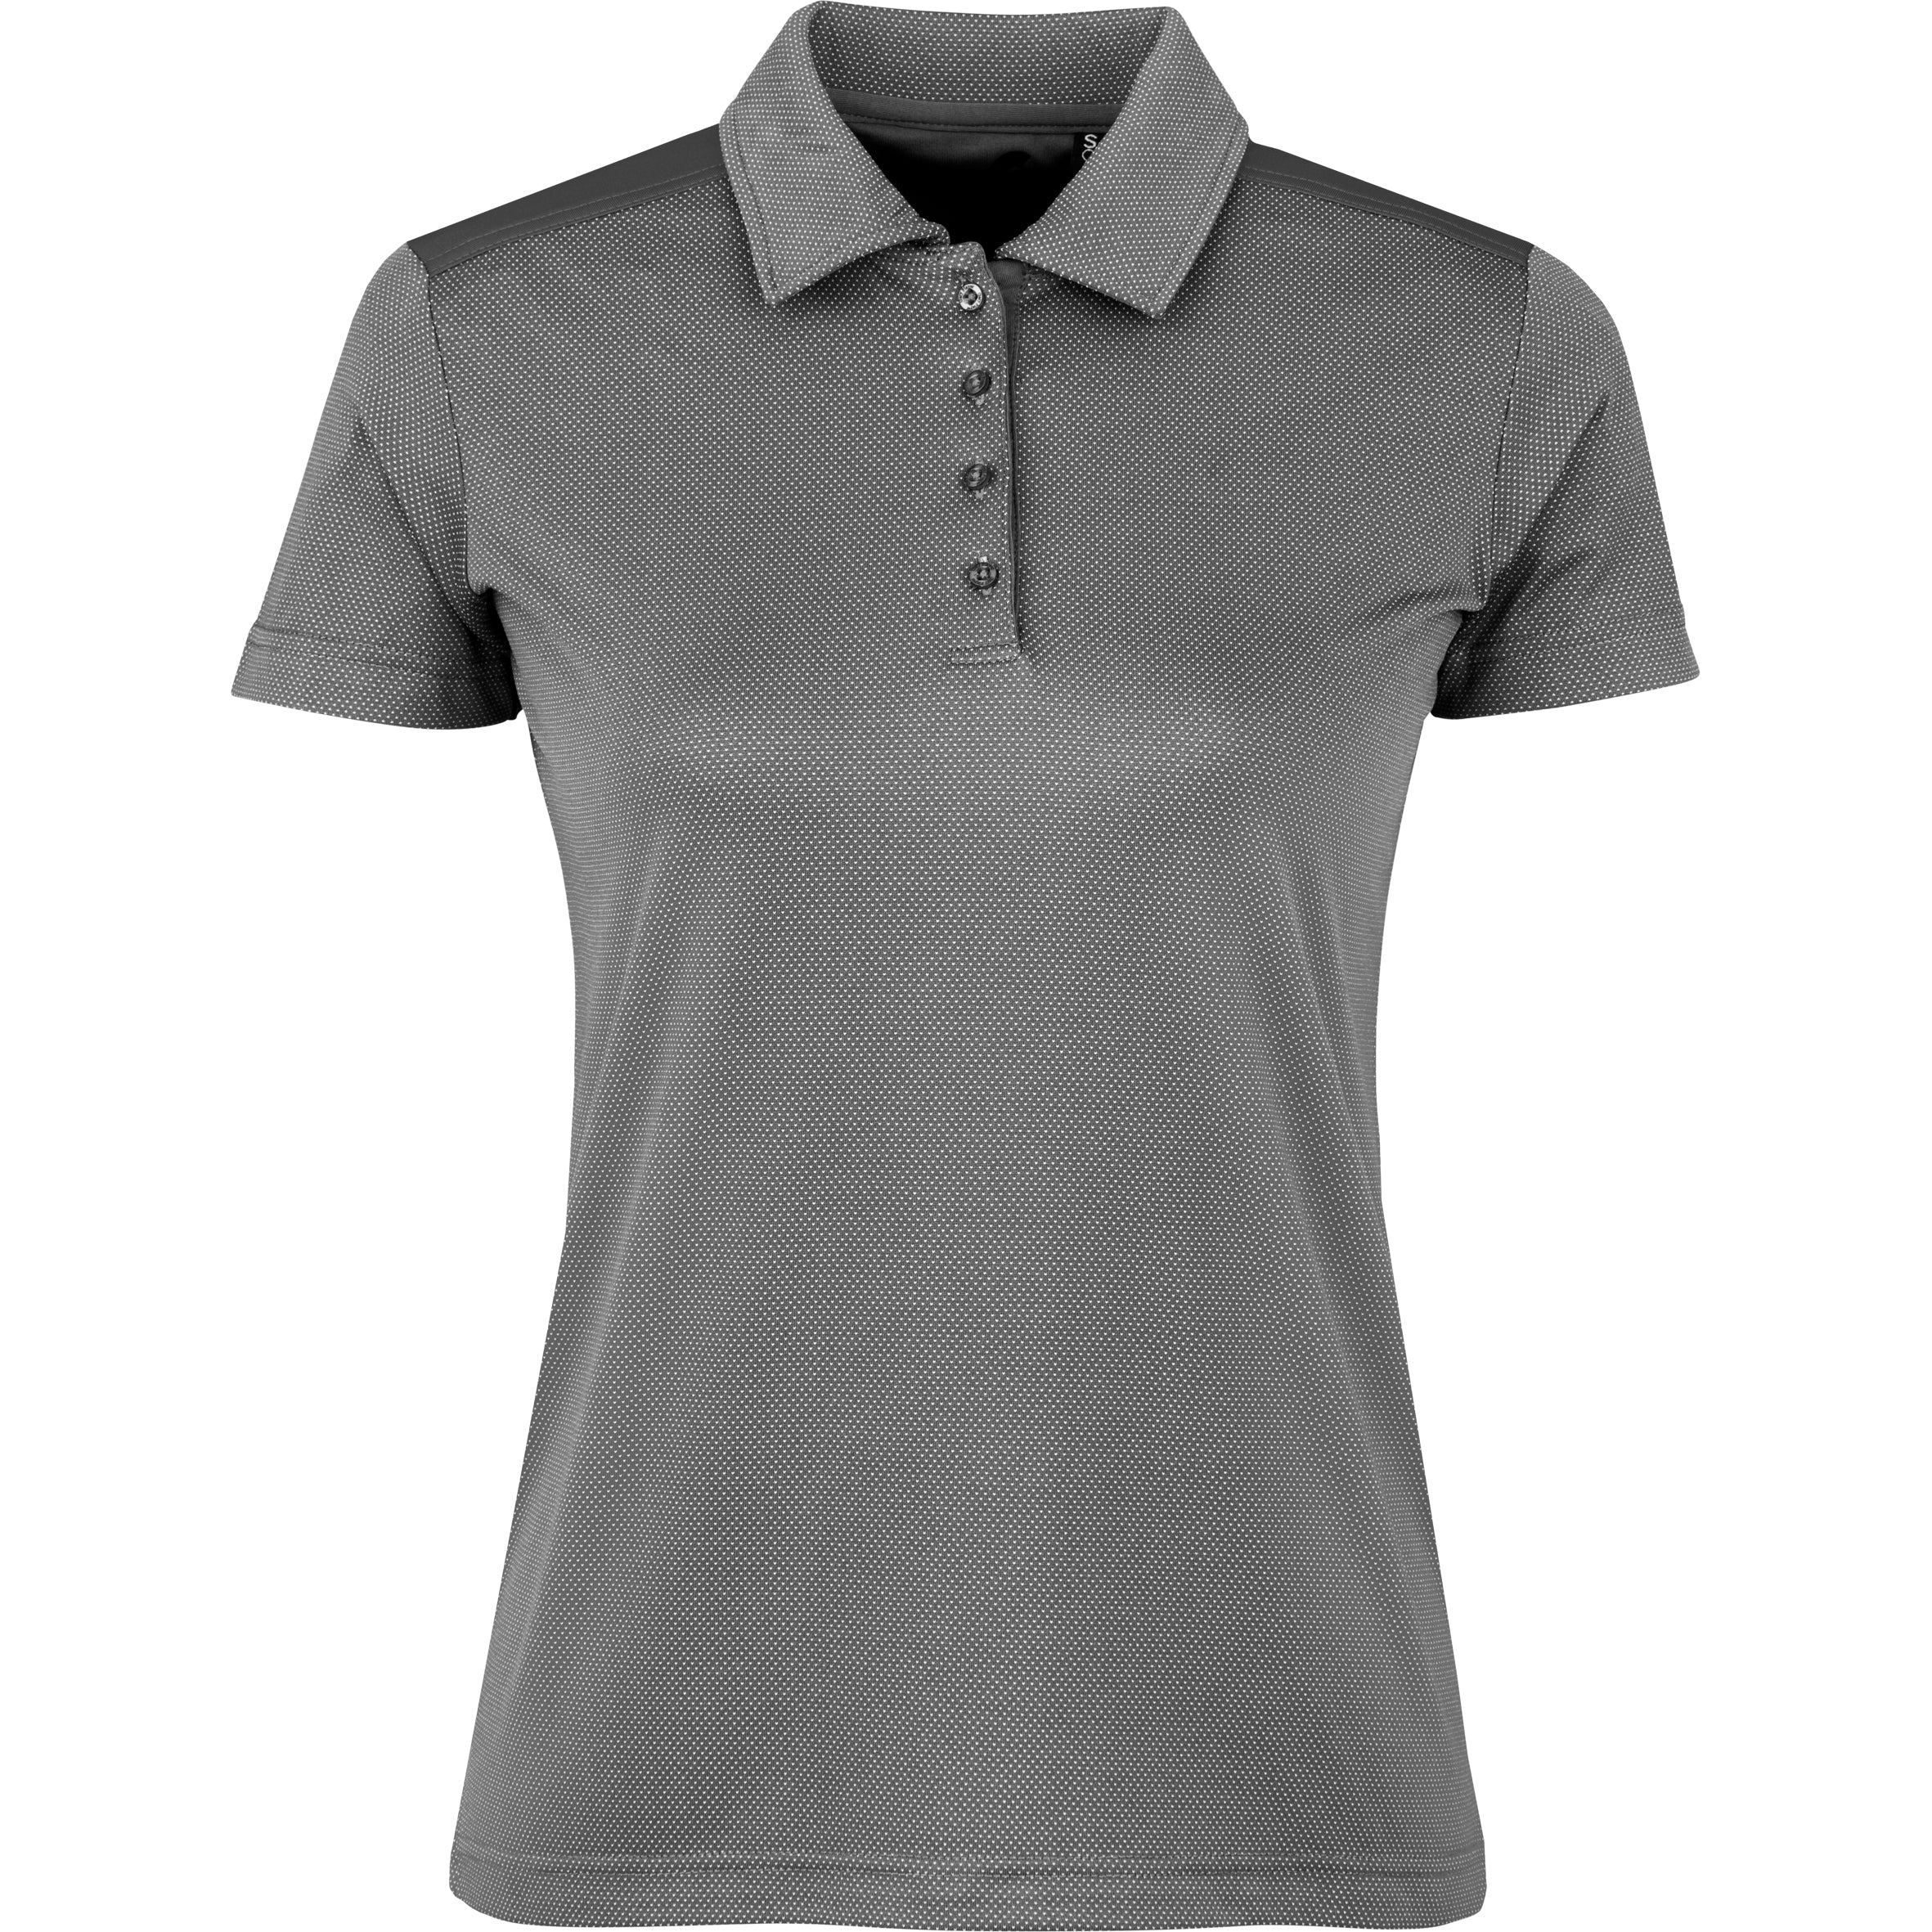 Ladies Sterling Ridge Golf Shirt - Navy Only-L-Grey-GY